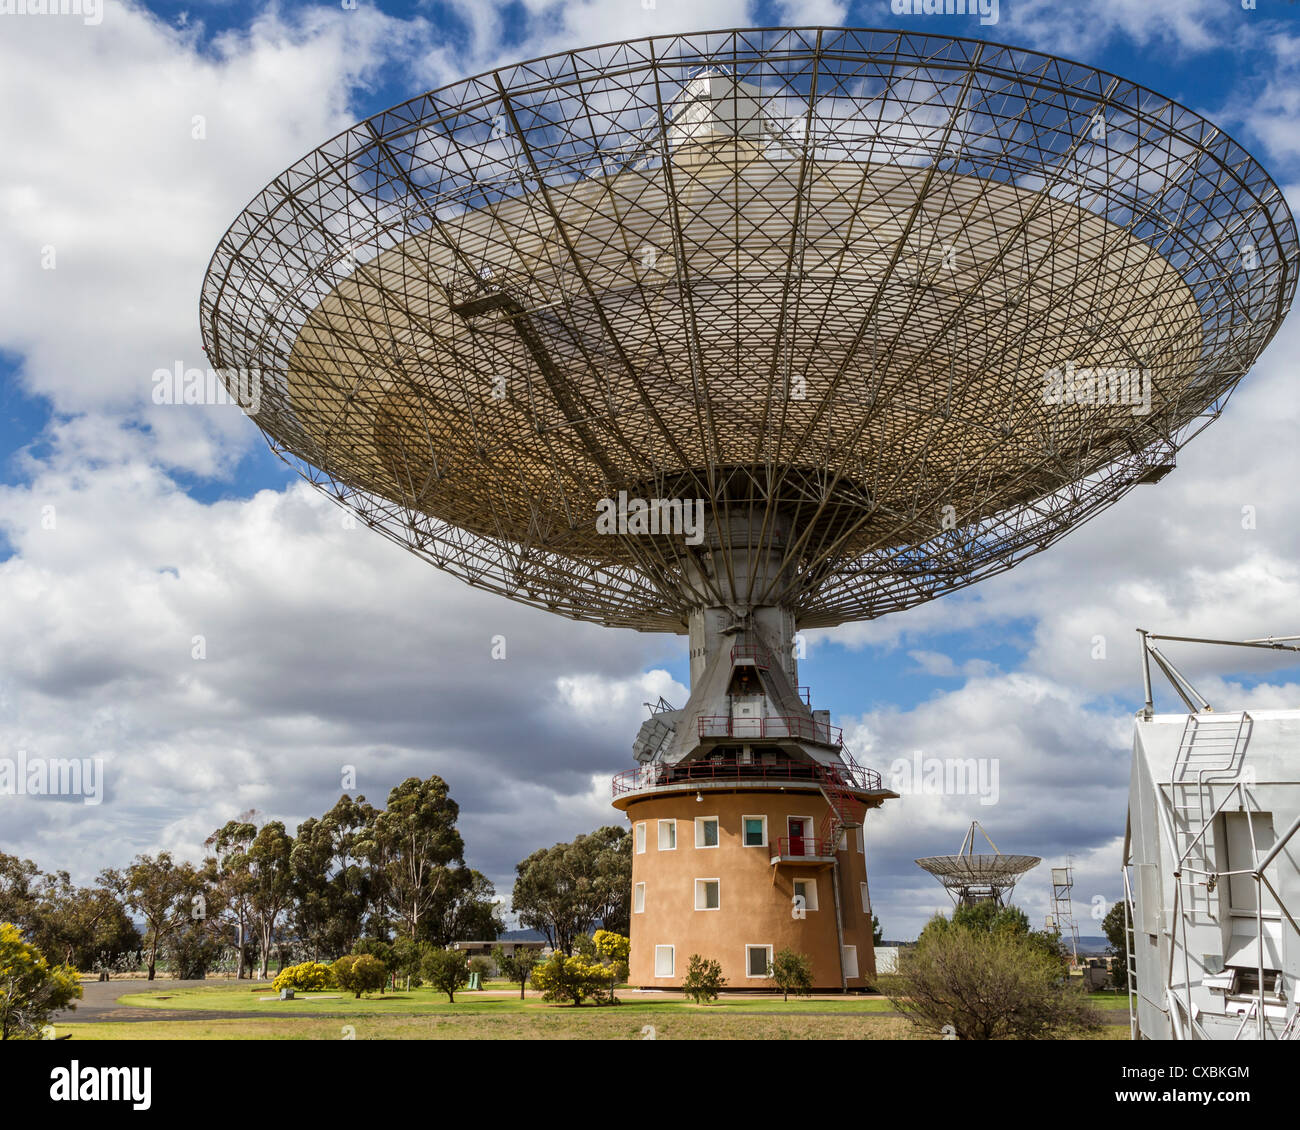 Parkes Radio Telescope, Parkes, NSW Australia Stock Photo ...